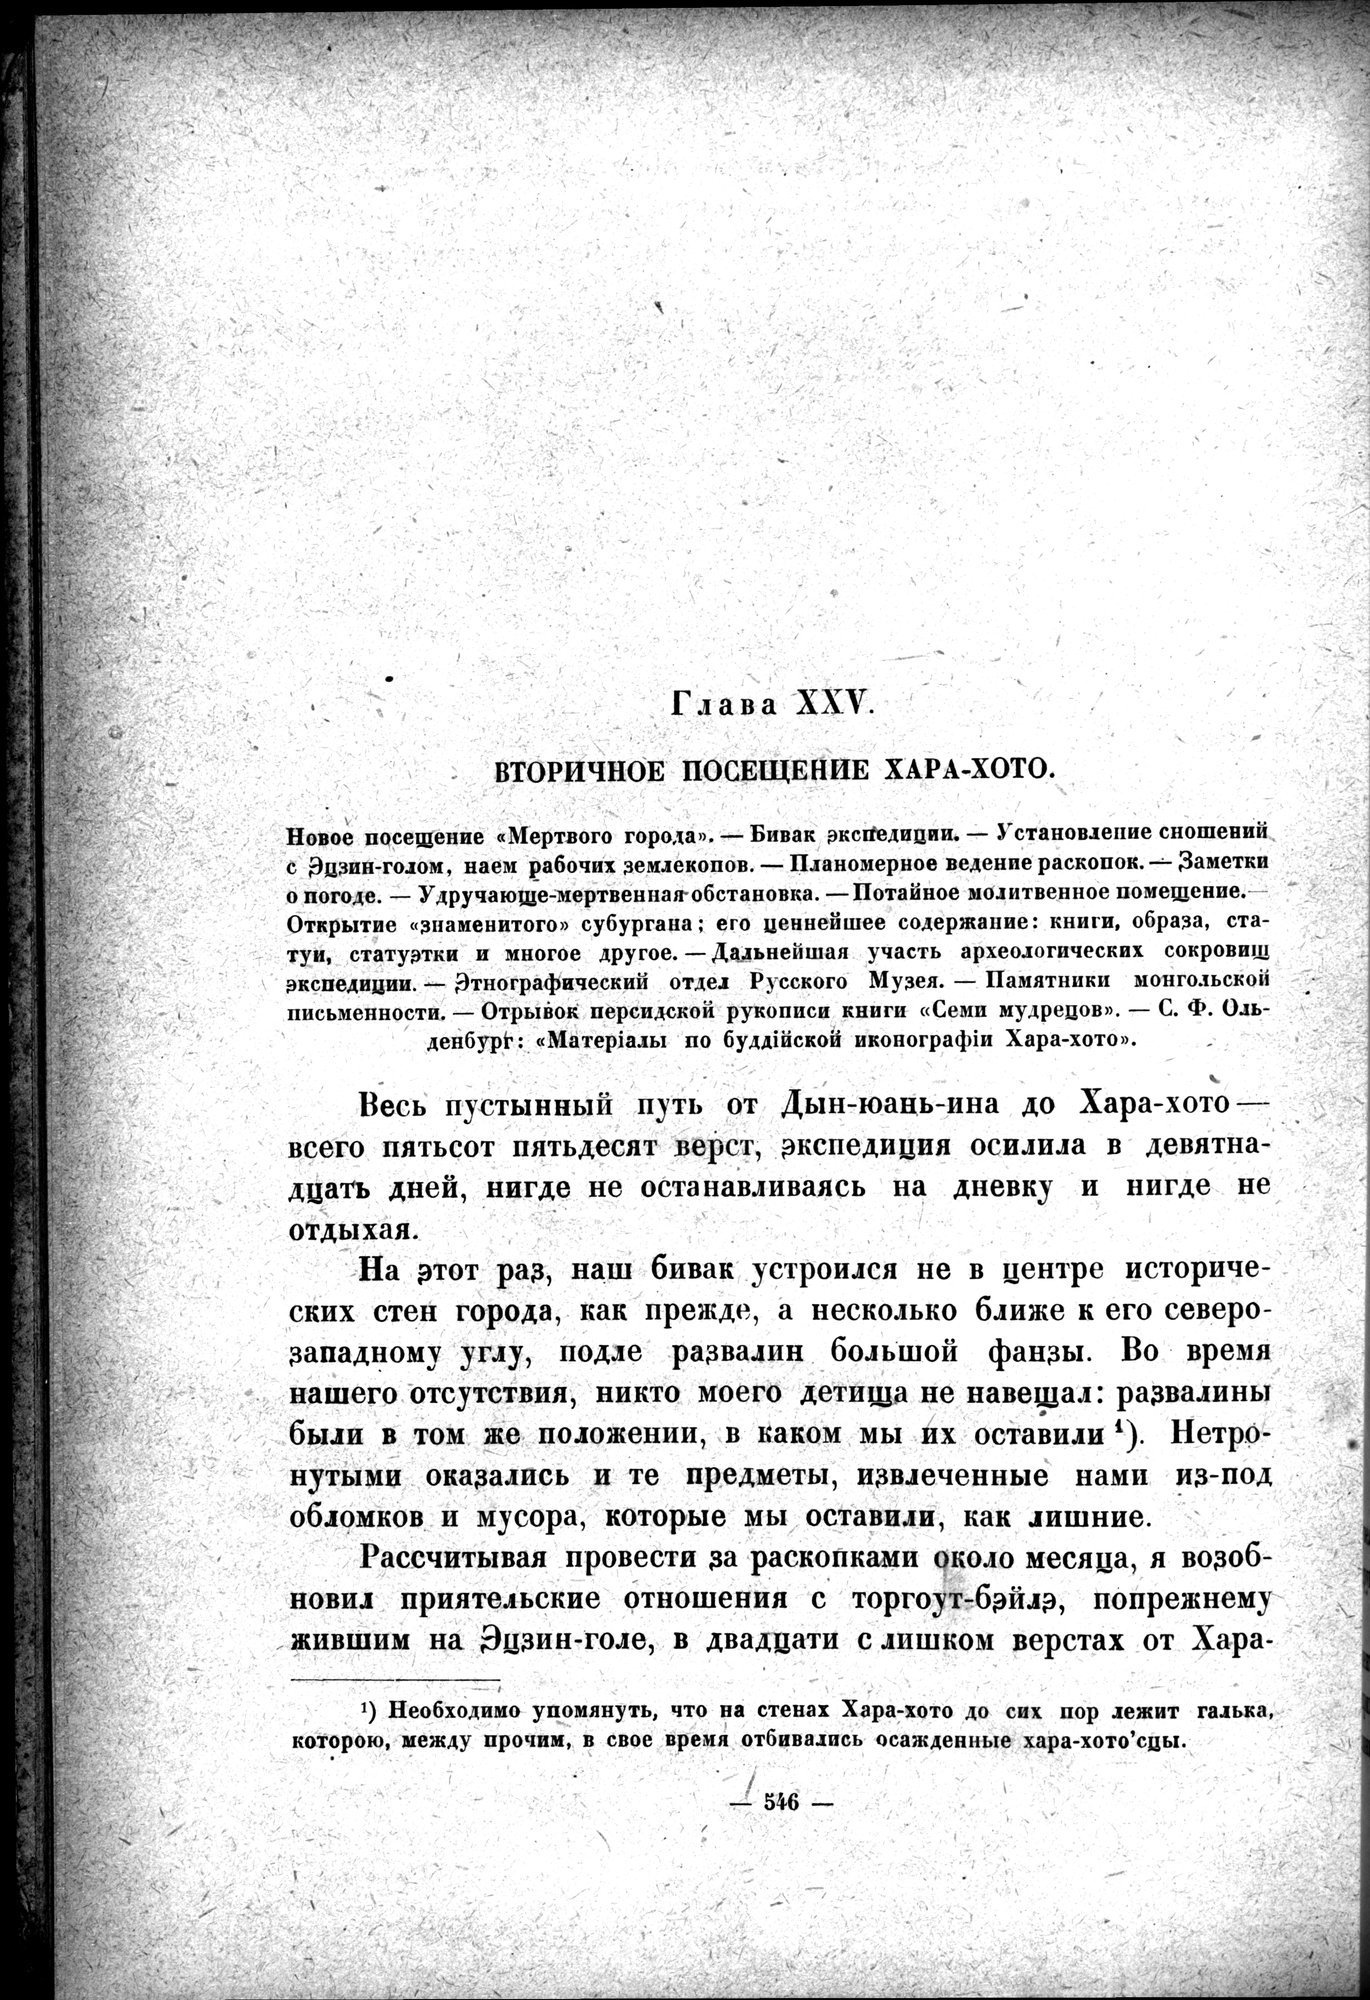 Mongoliya i Amdo i mertby gorod Khara-Khoto : vol.1 / Page 632 (Grayscale High Resolution Image)